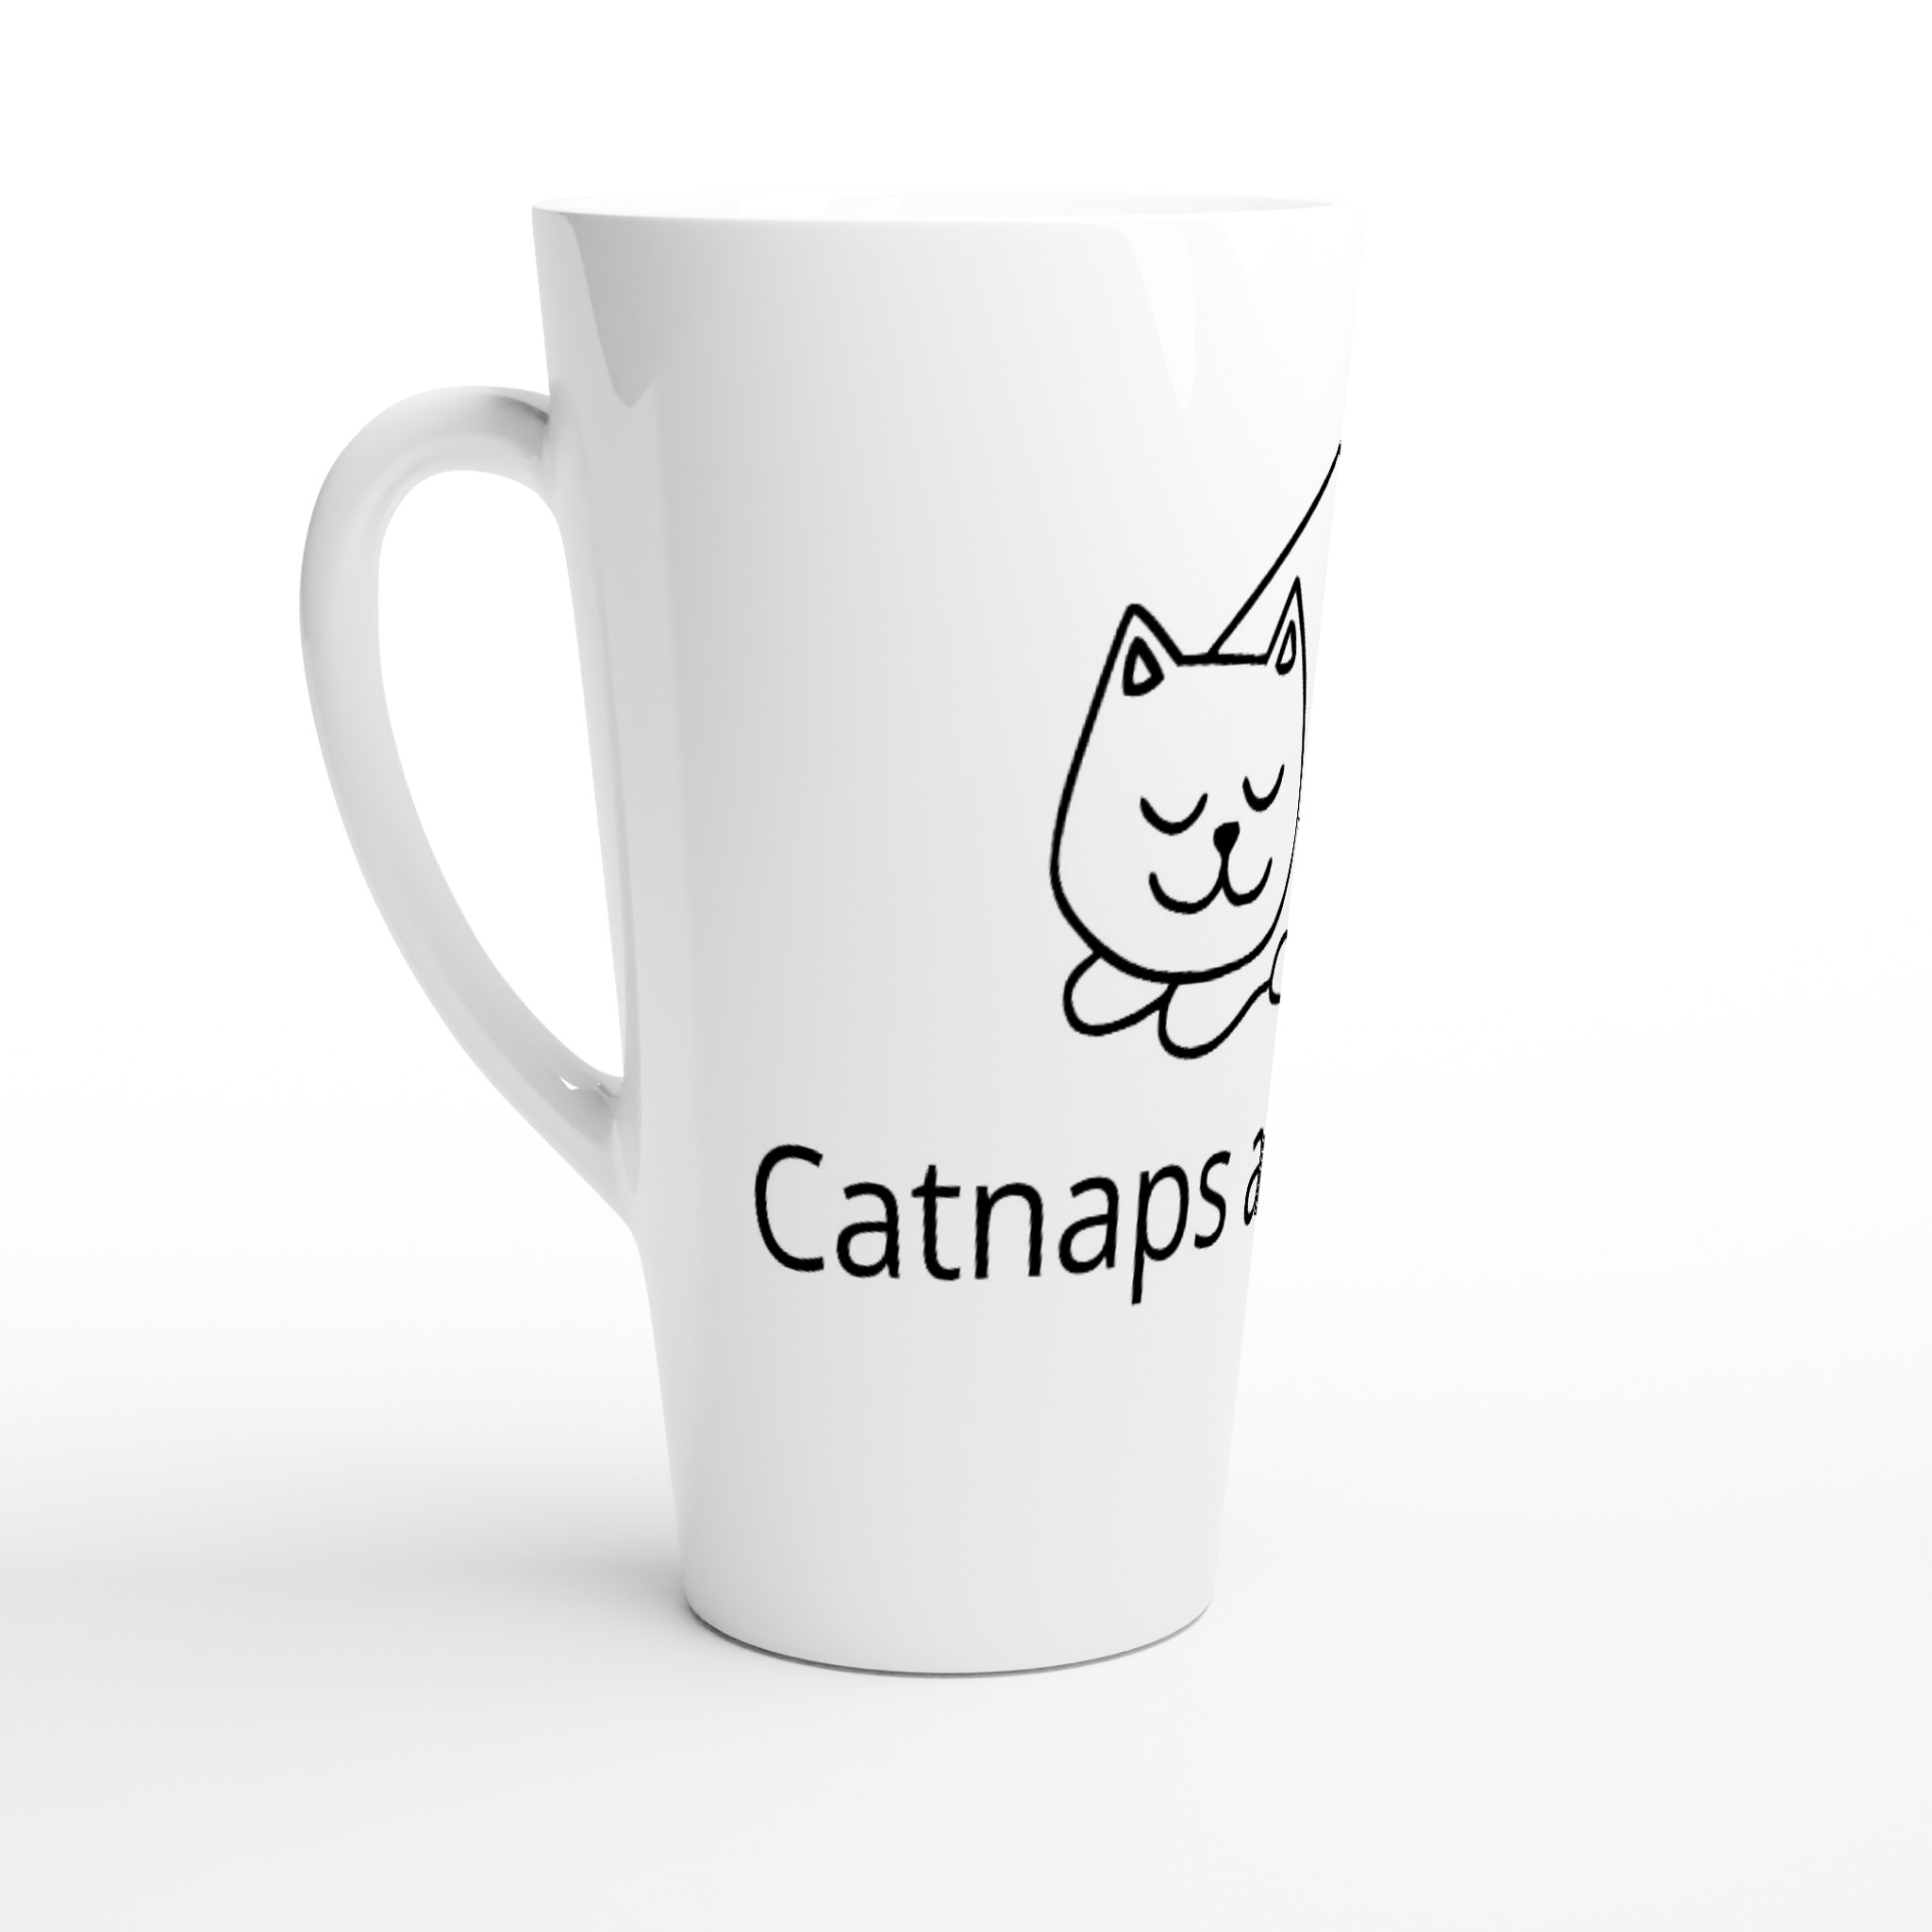 White Latte 17oz Ceramic Mug - Catnaps and Coffee Design